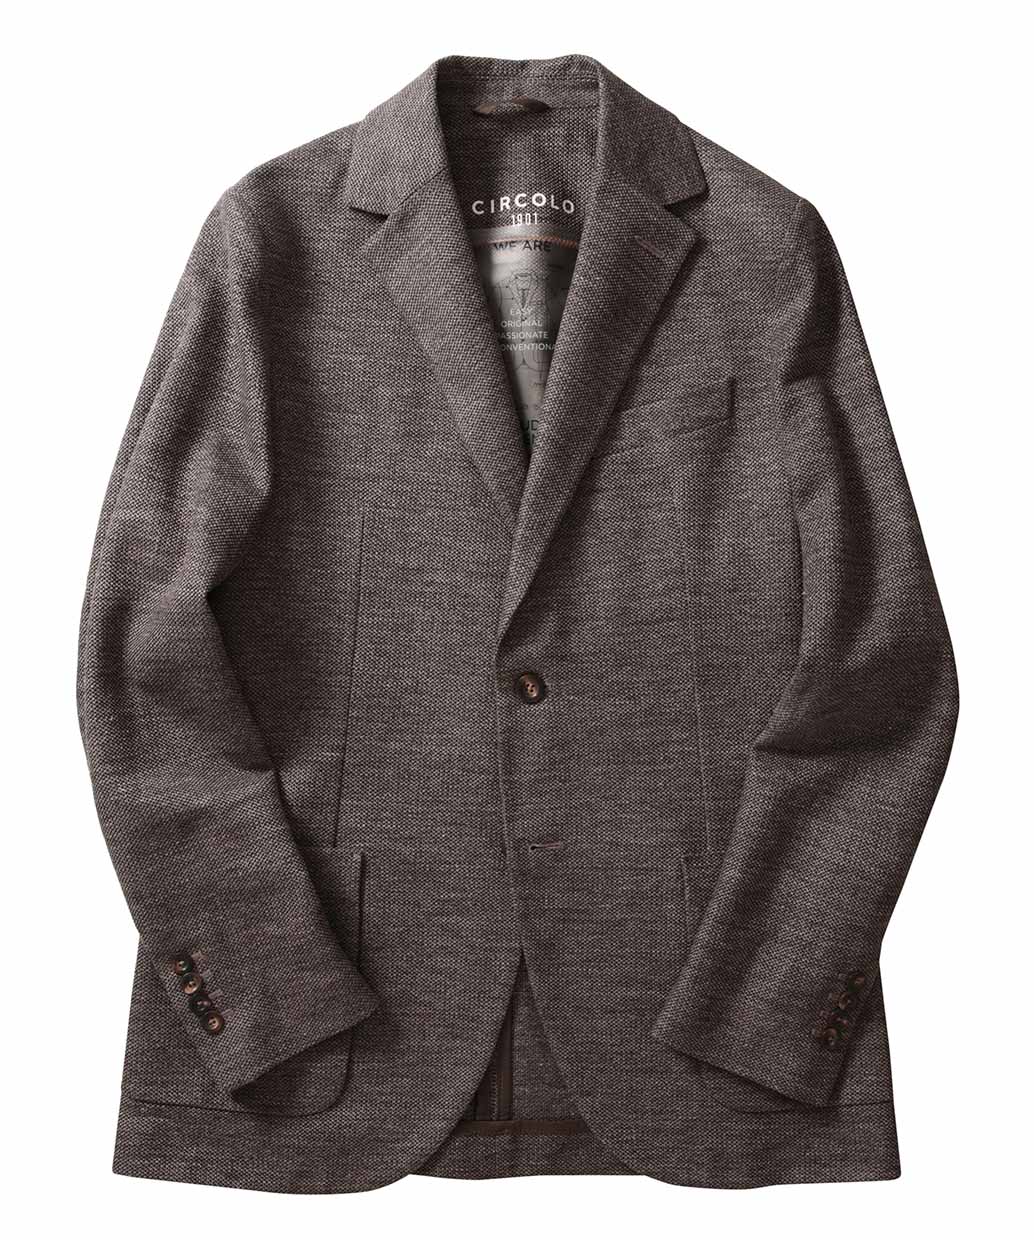 CIRCOLO 1901〈チルコロ 1901〉Men'sのジャケット